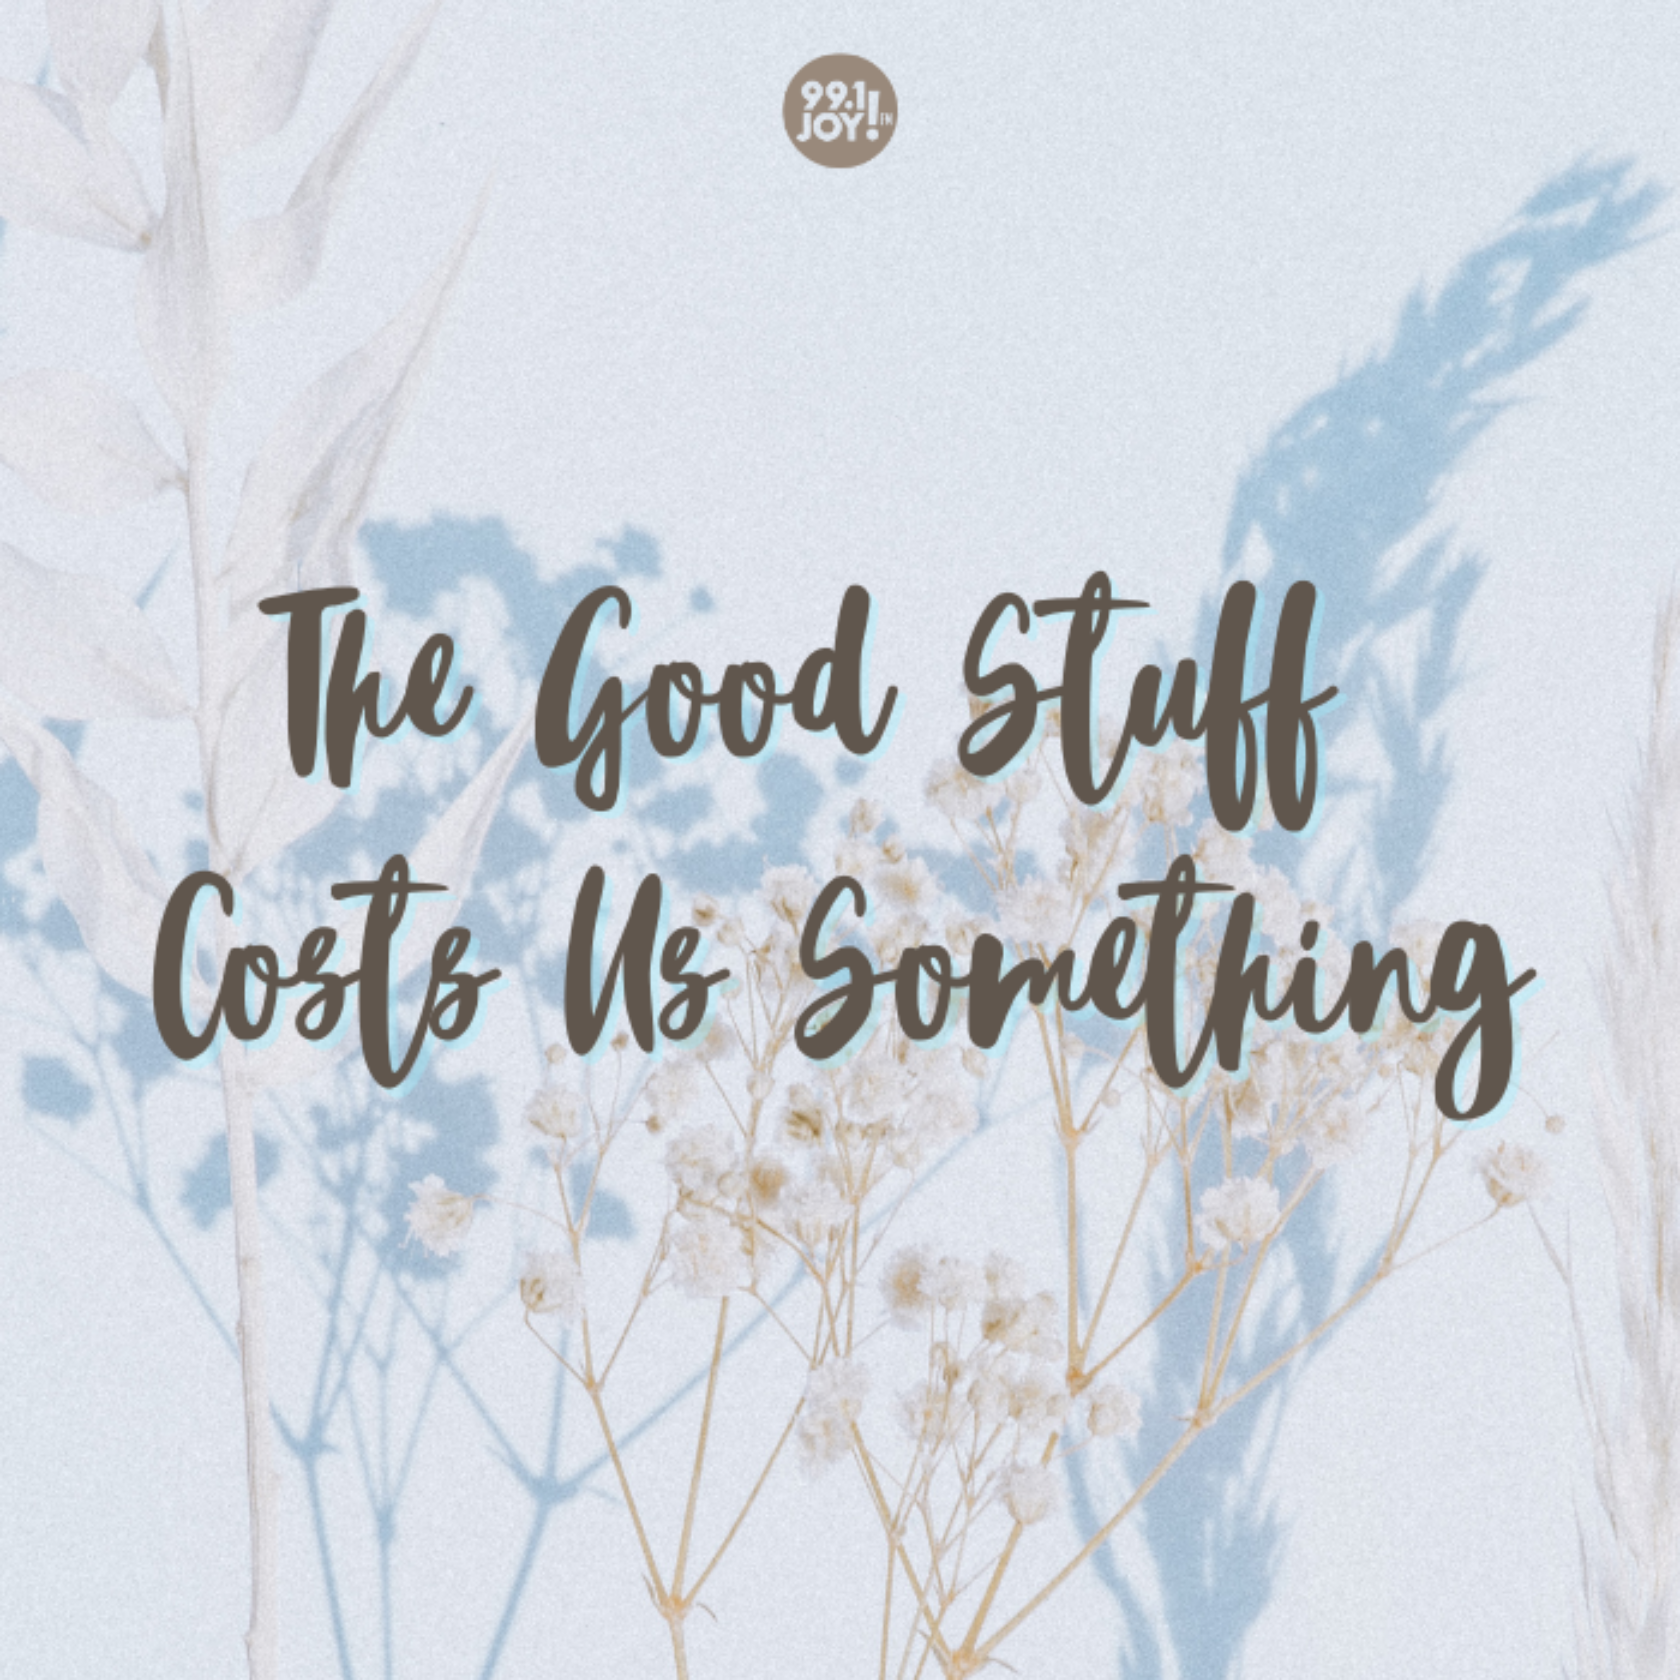 The Good Stuff Costs Us Something